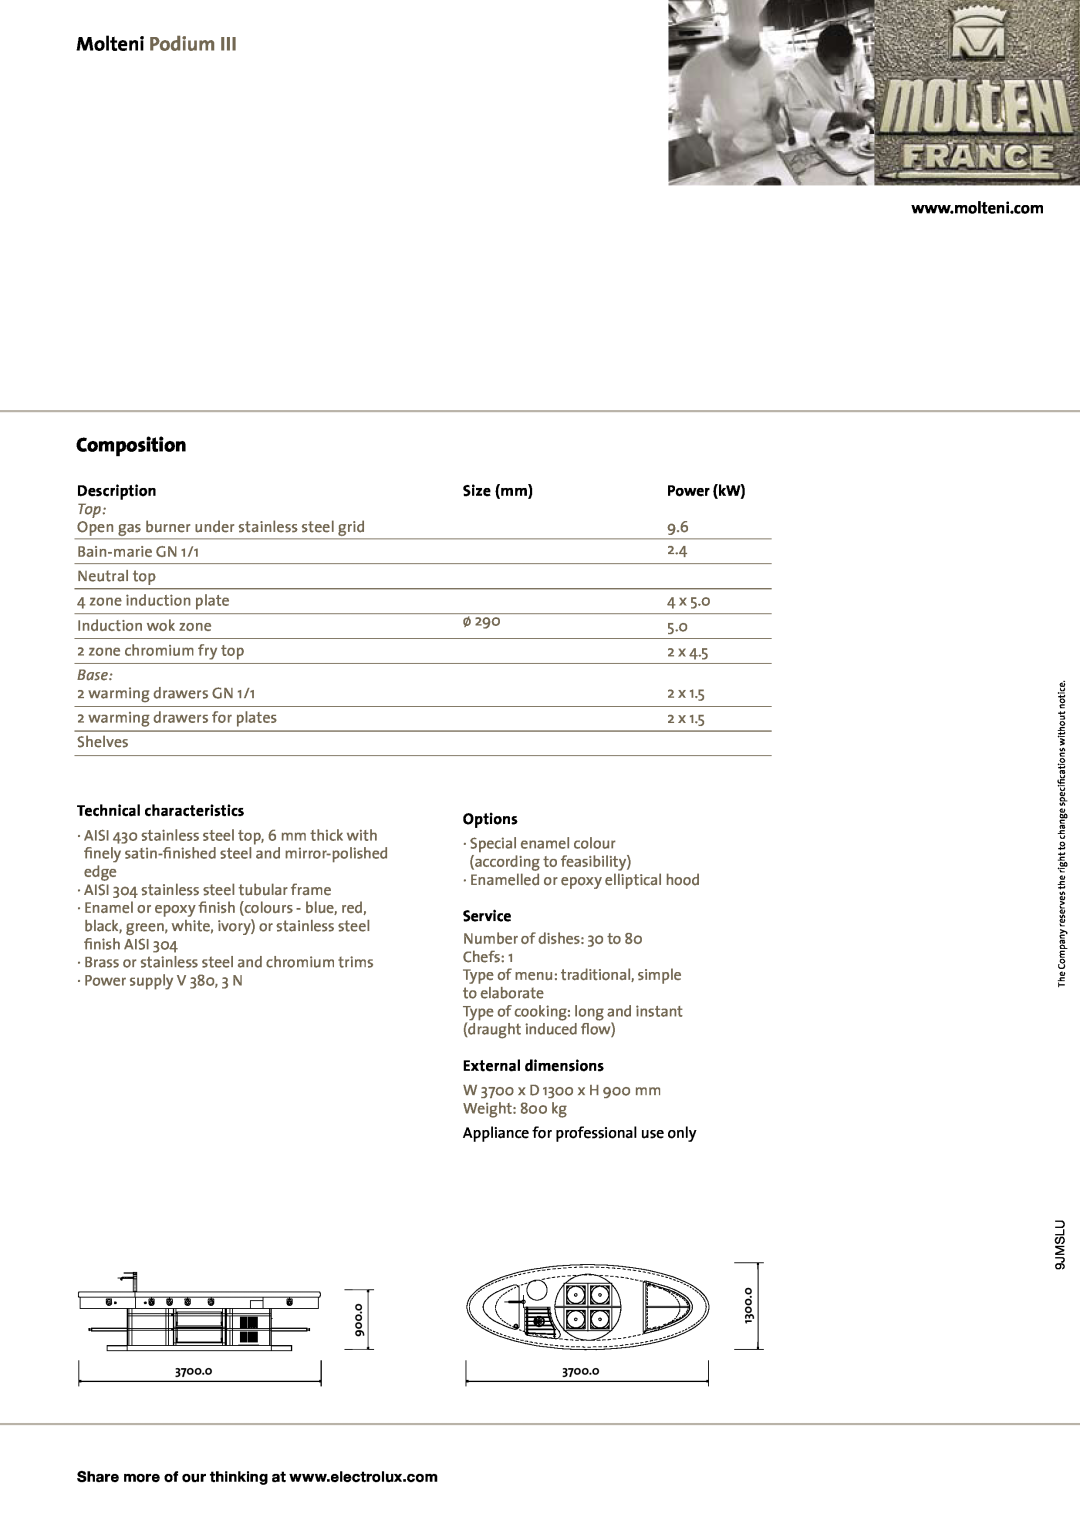 Molteni III manual Molteni Podium, Composition, Description, Size mm, Power kW, Technical characteristics, Options, Service 